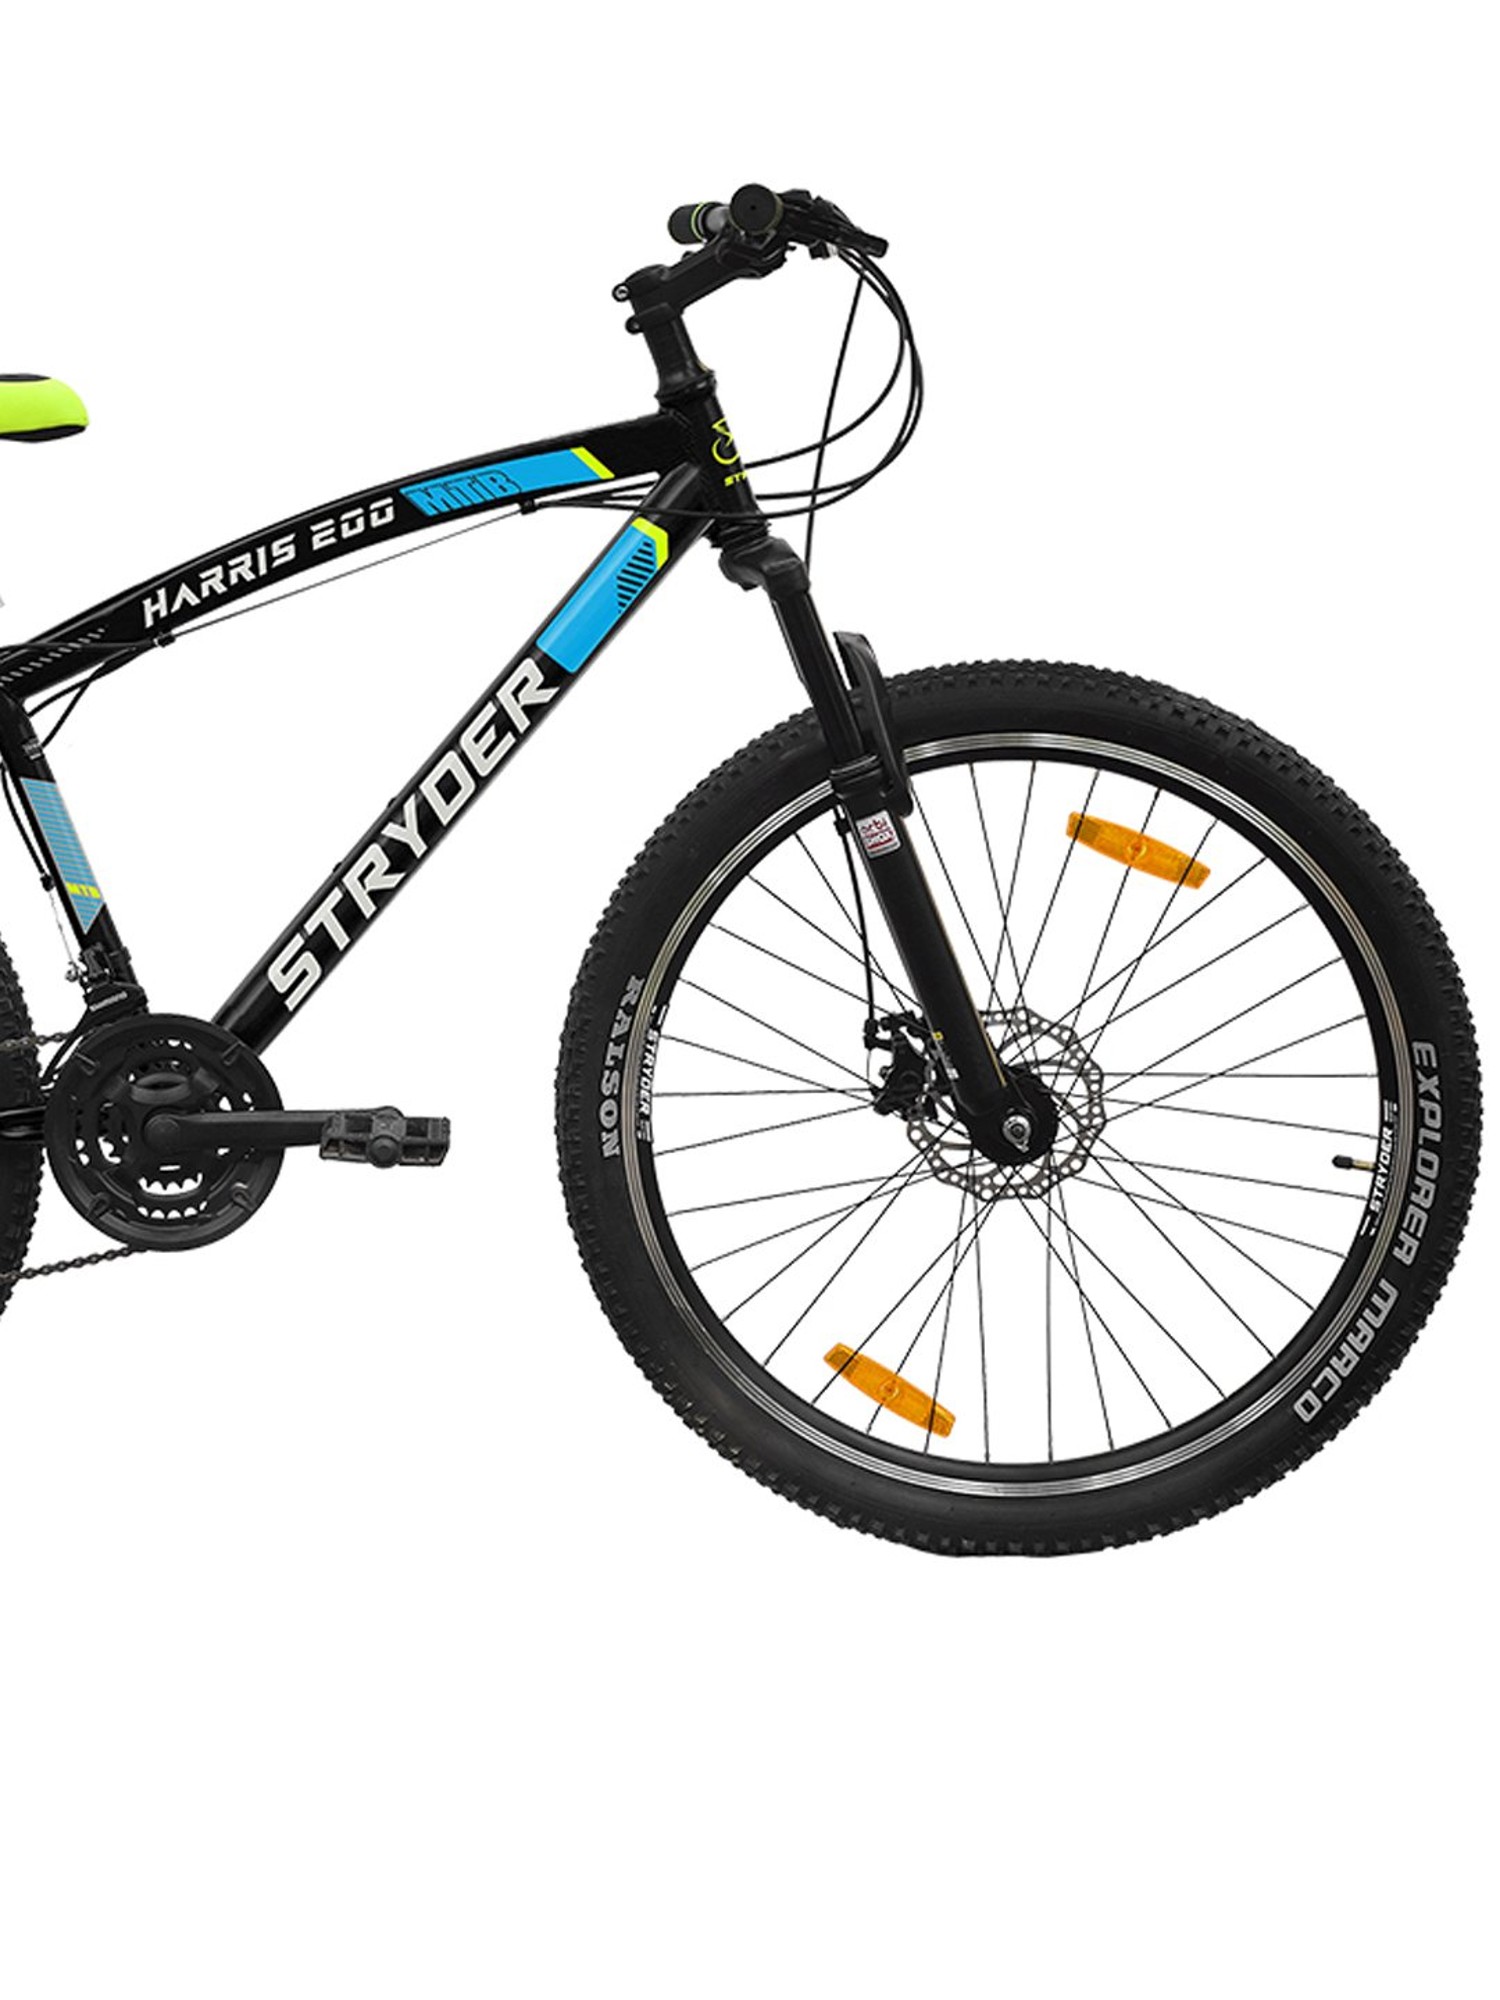 Stryder Matt Black Harris 200 21S MTB Bicycle (27.5 inch Wheel)